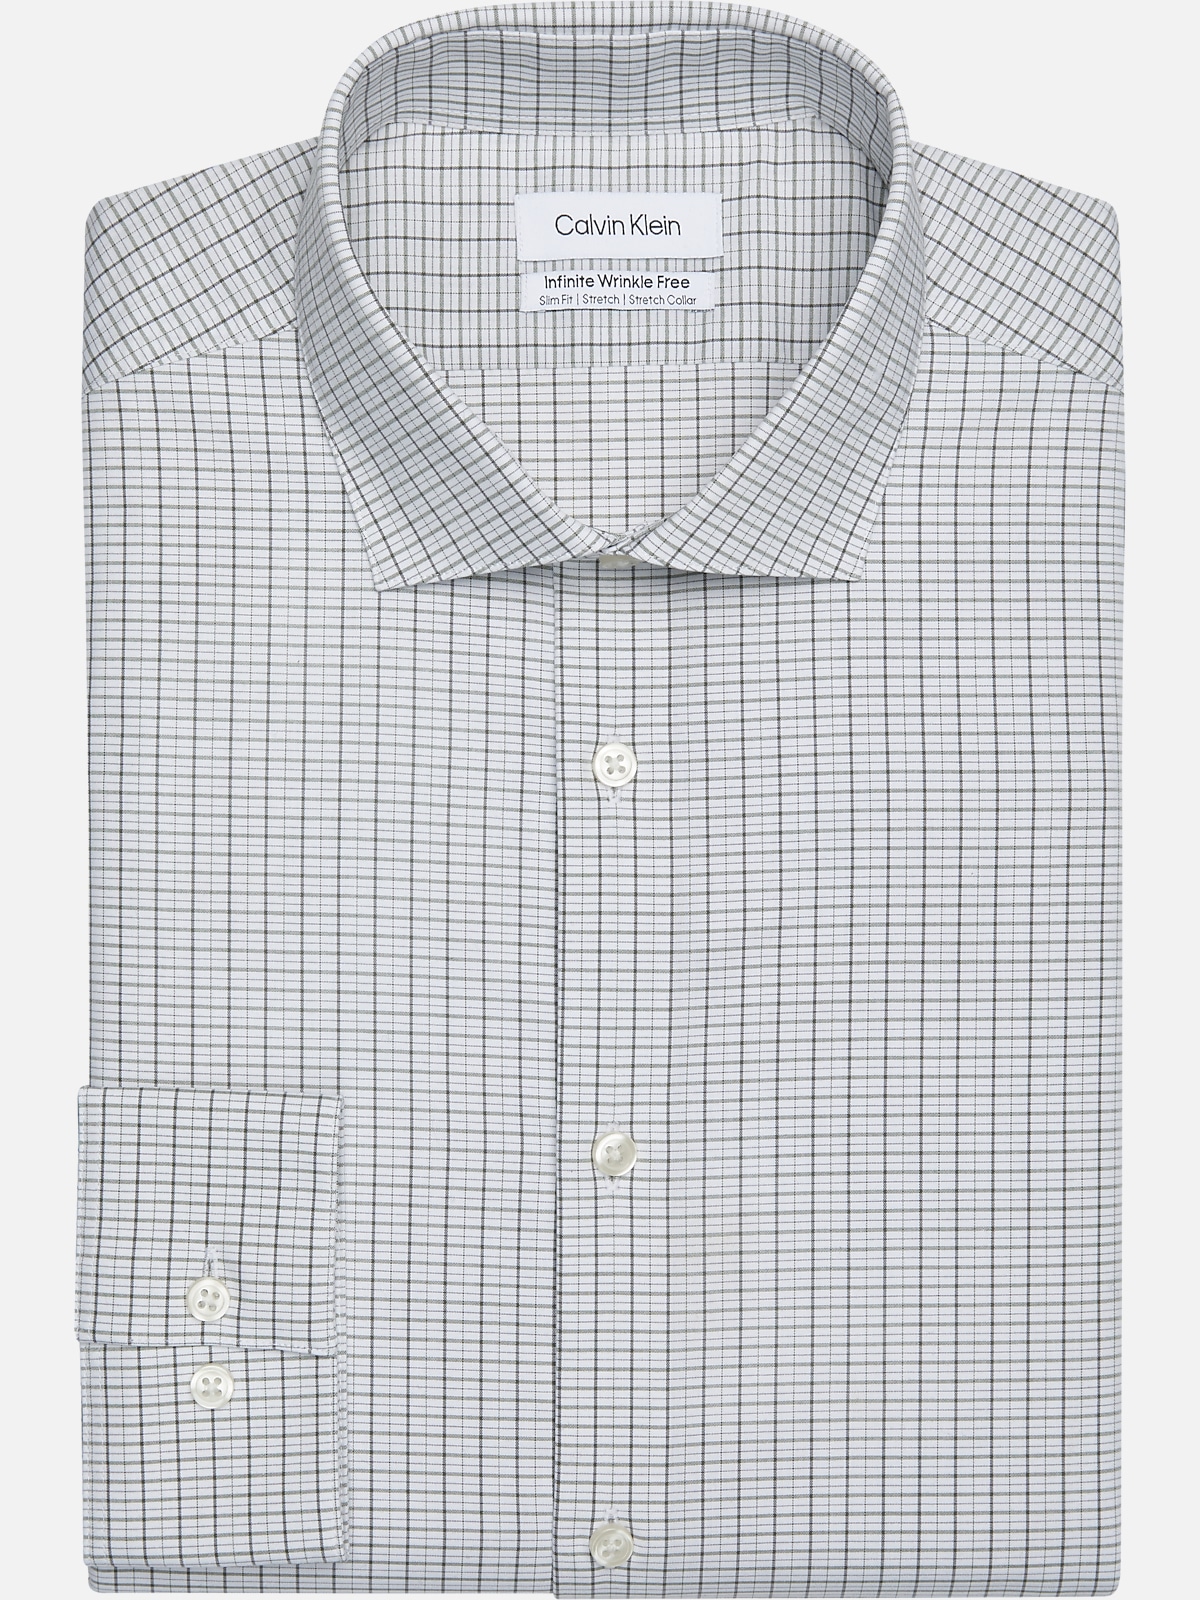 Calvin Klein Infinite Wrinkle Free Slim Fit Stretch Collar Grid Dress Shirt  | Clearance Dress Shirts| Men's Wearhouse